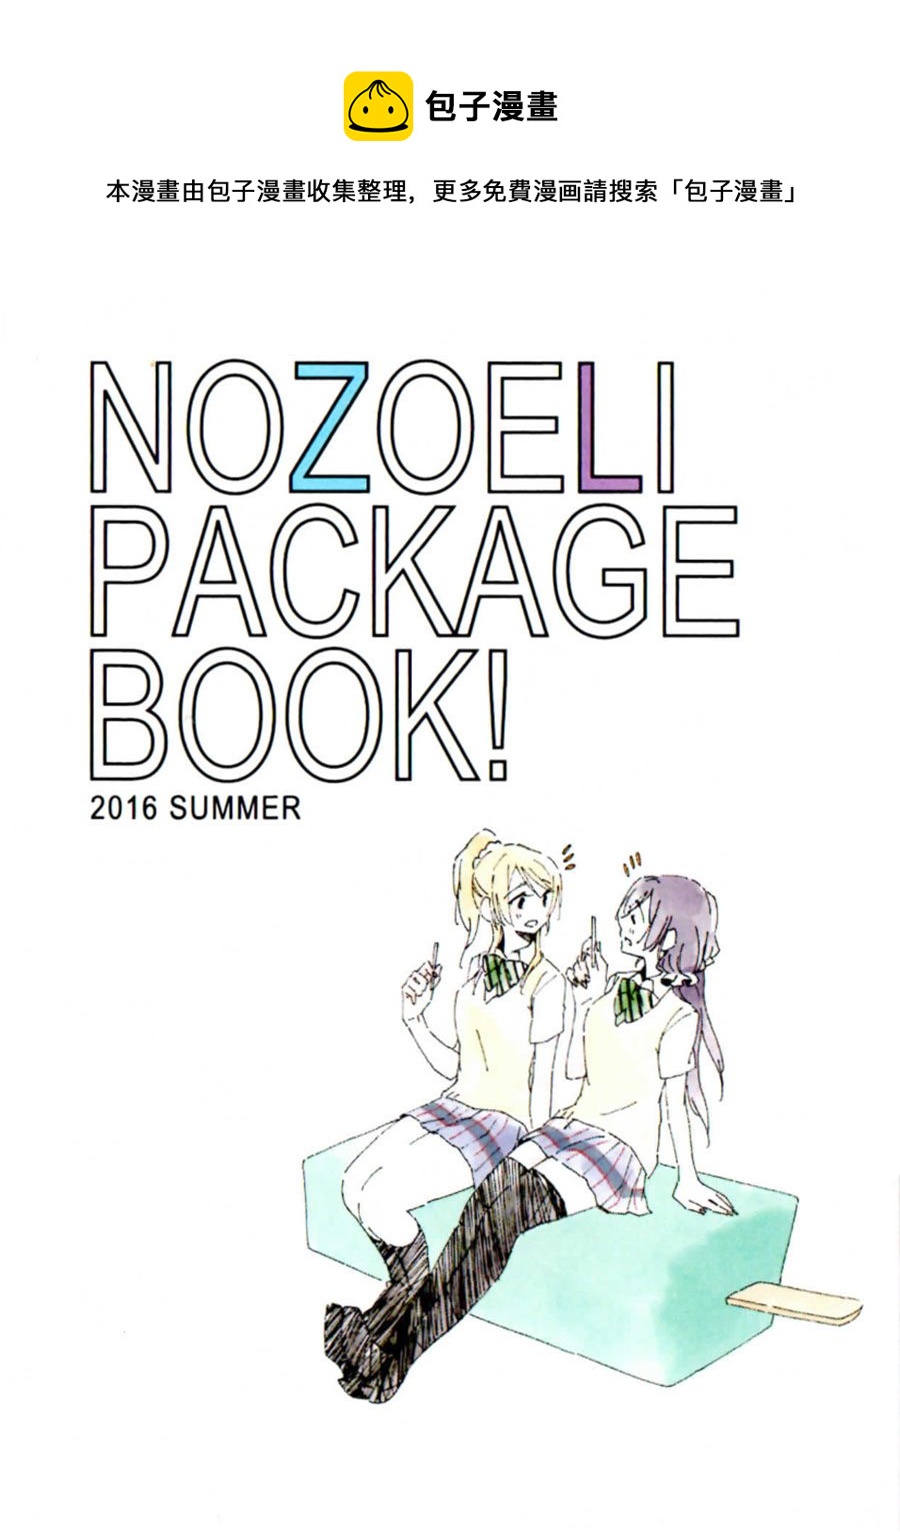 NOZOELI PACKAGE BOOK! - 第1話 - 1